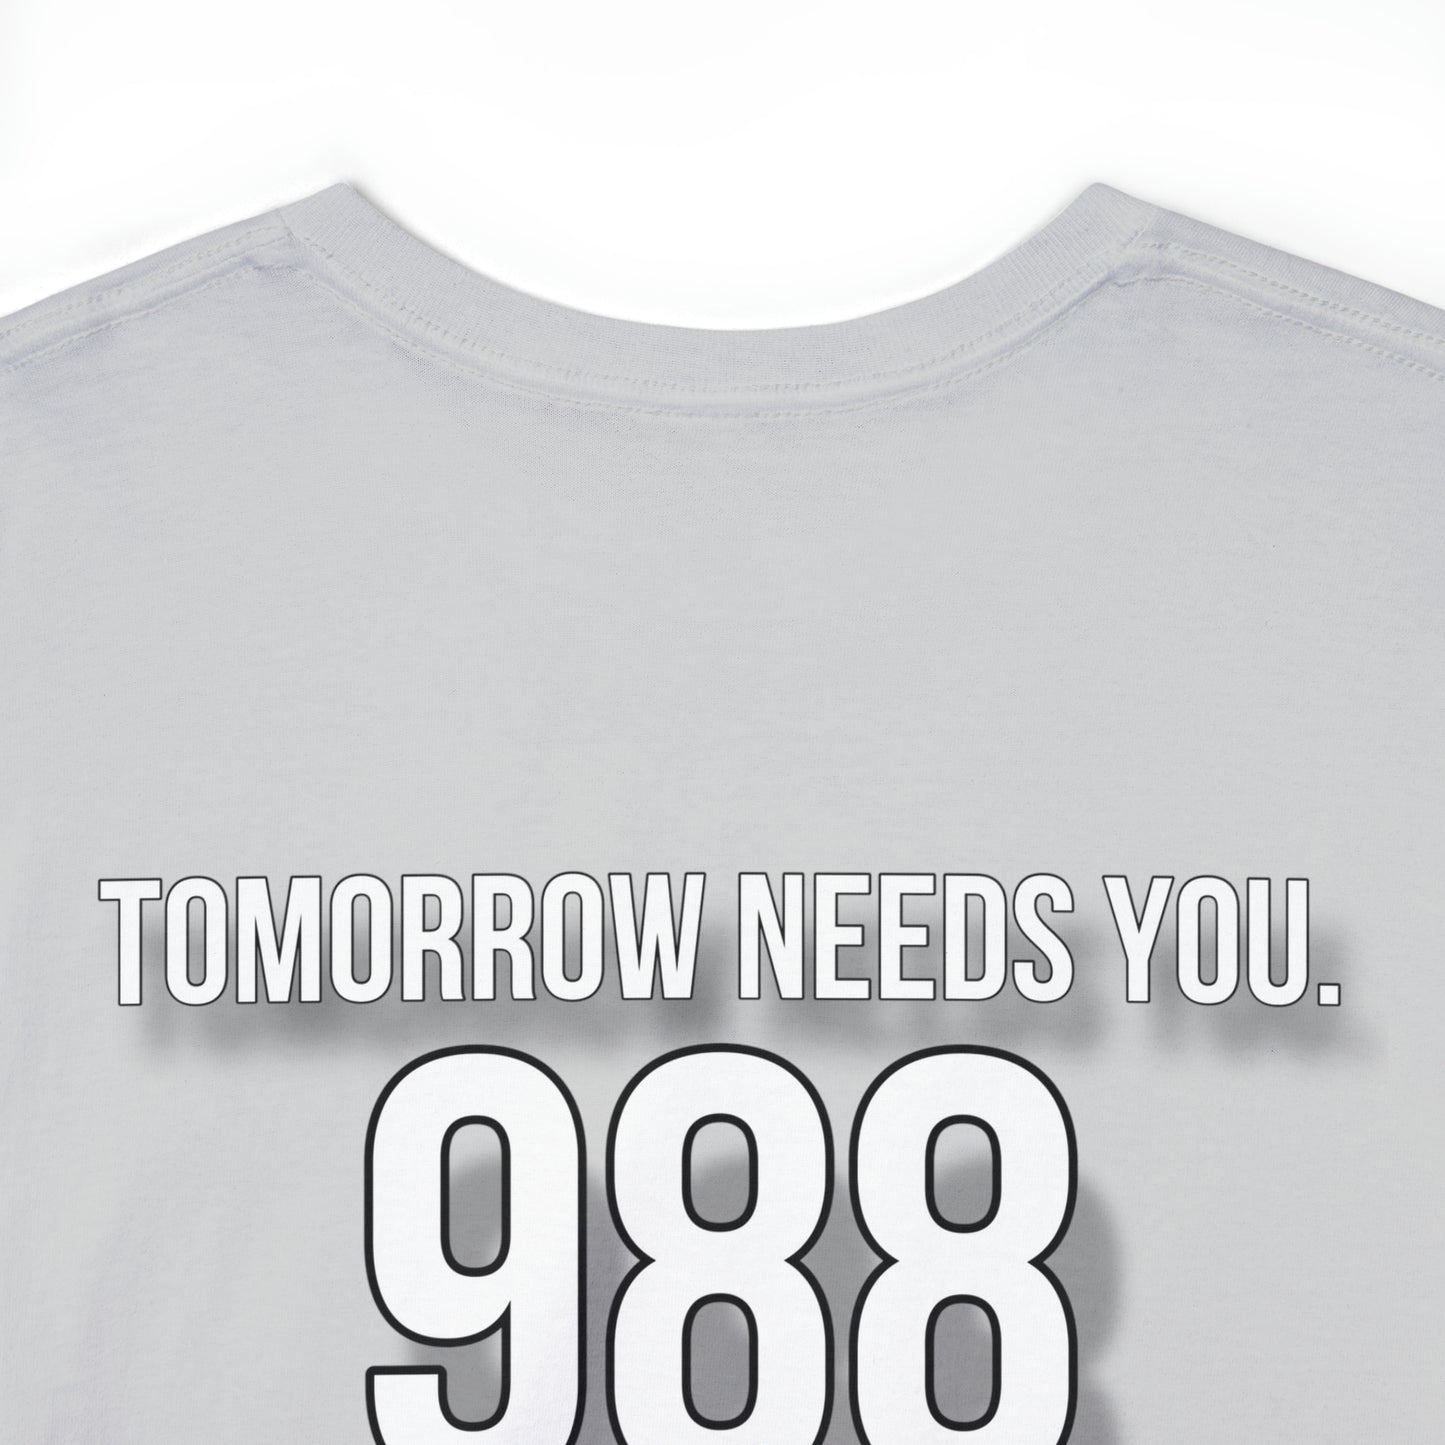 Tomorrow Needs You t-shirt